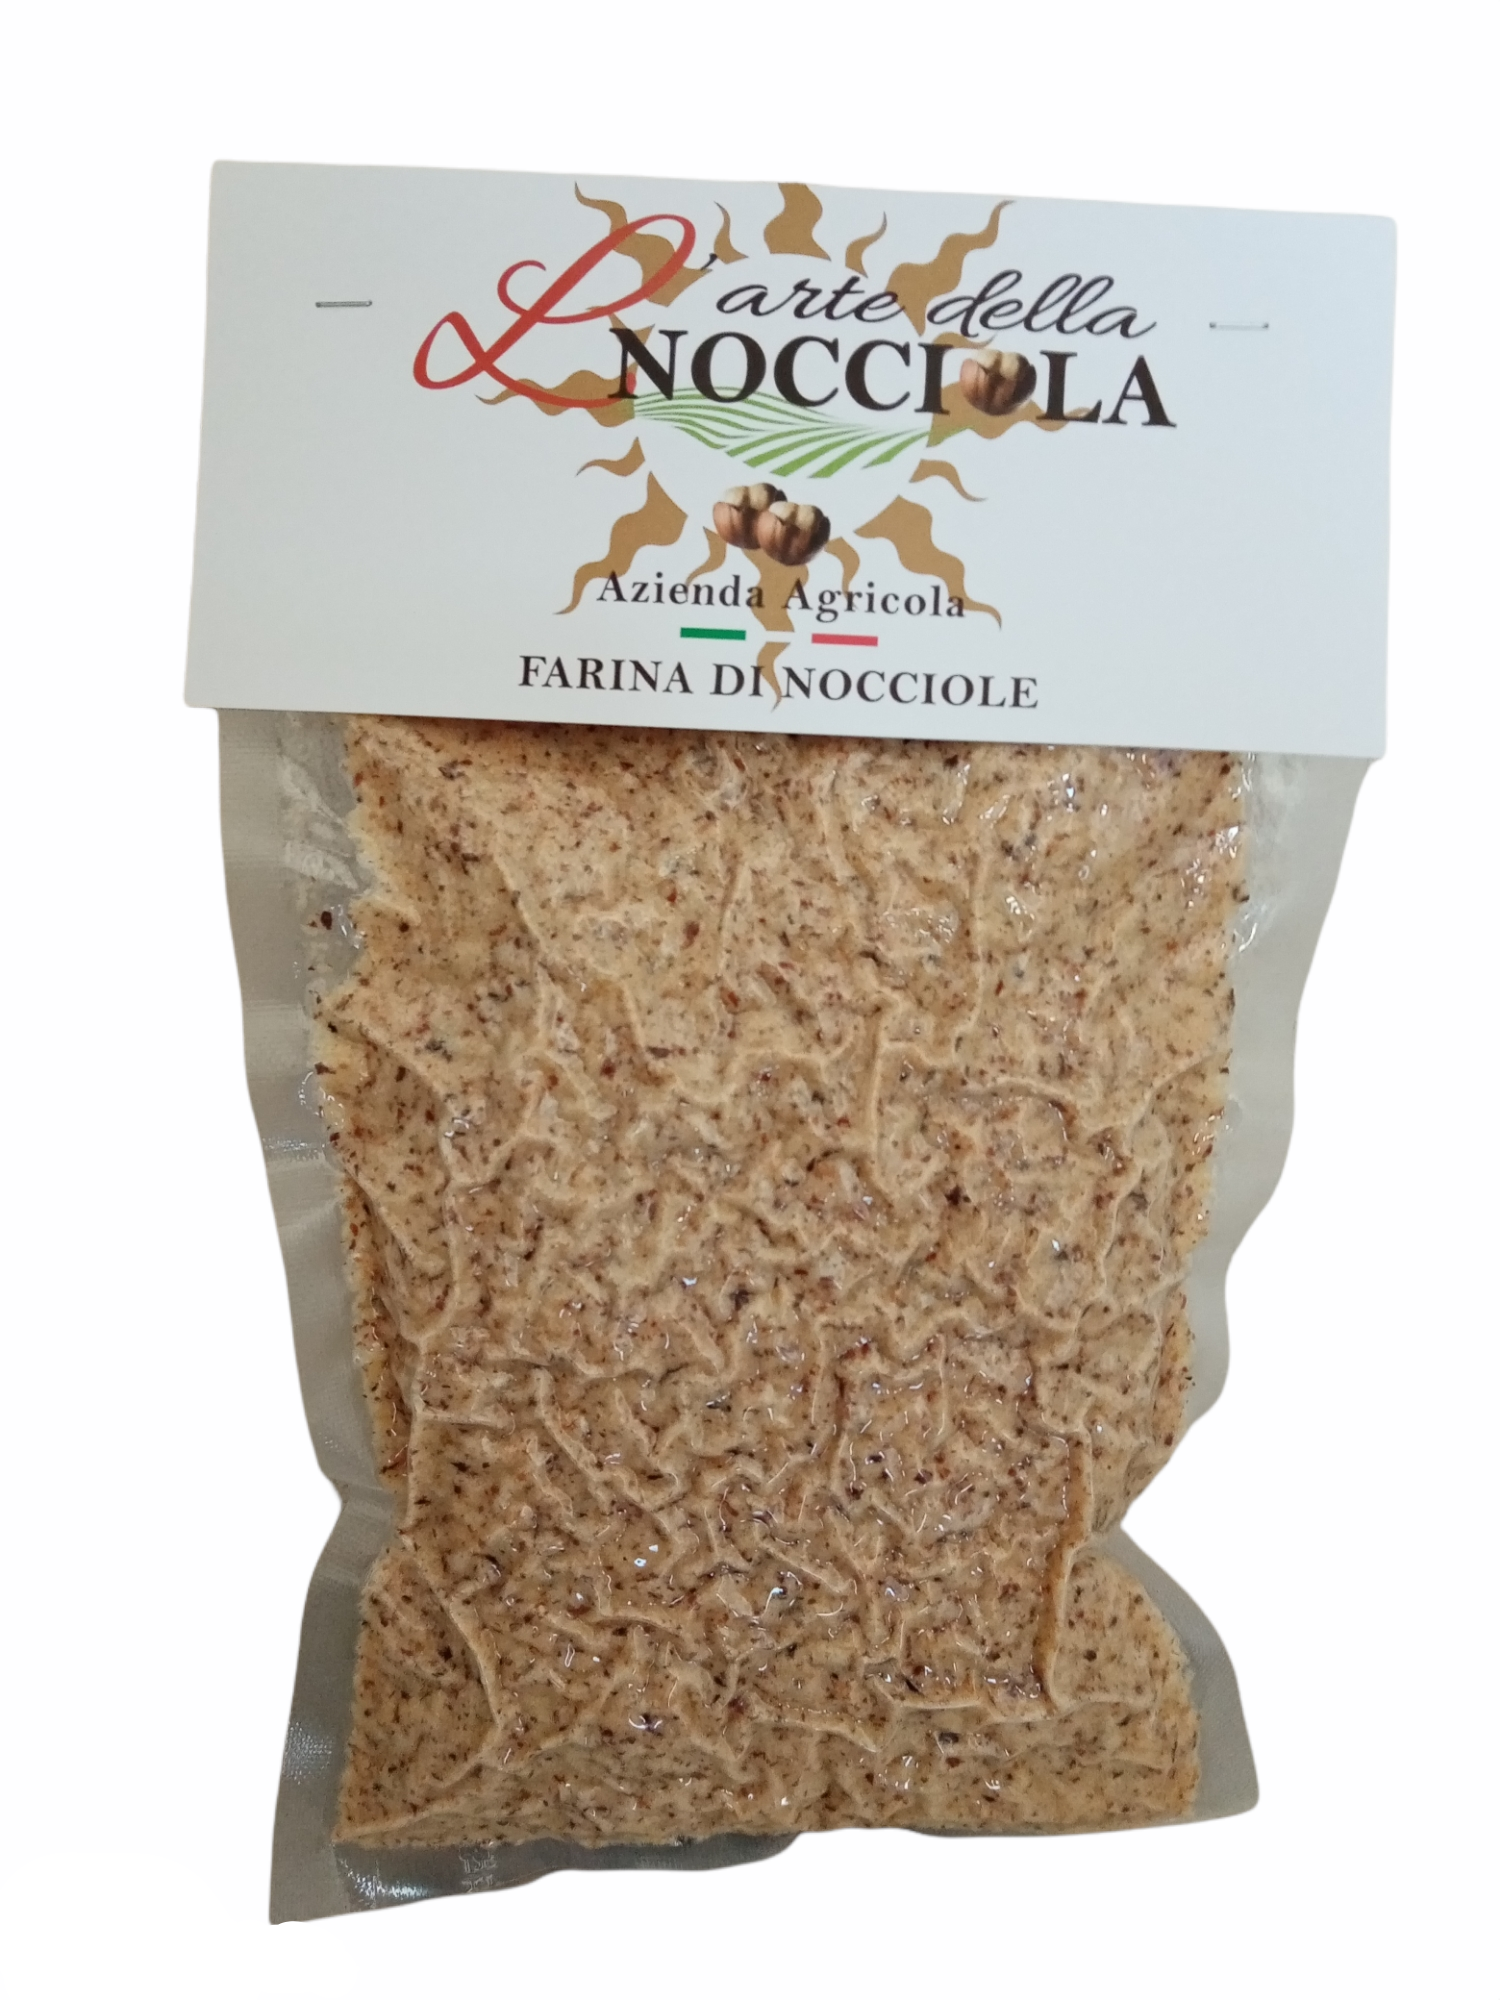 Farina di Nocciola /Tonda Gentile Trilobata hazelnut flour